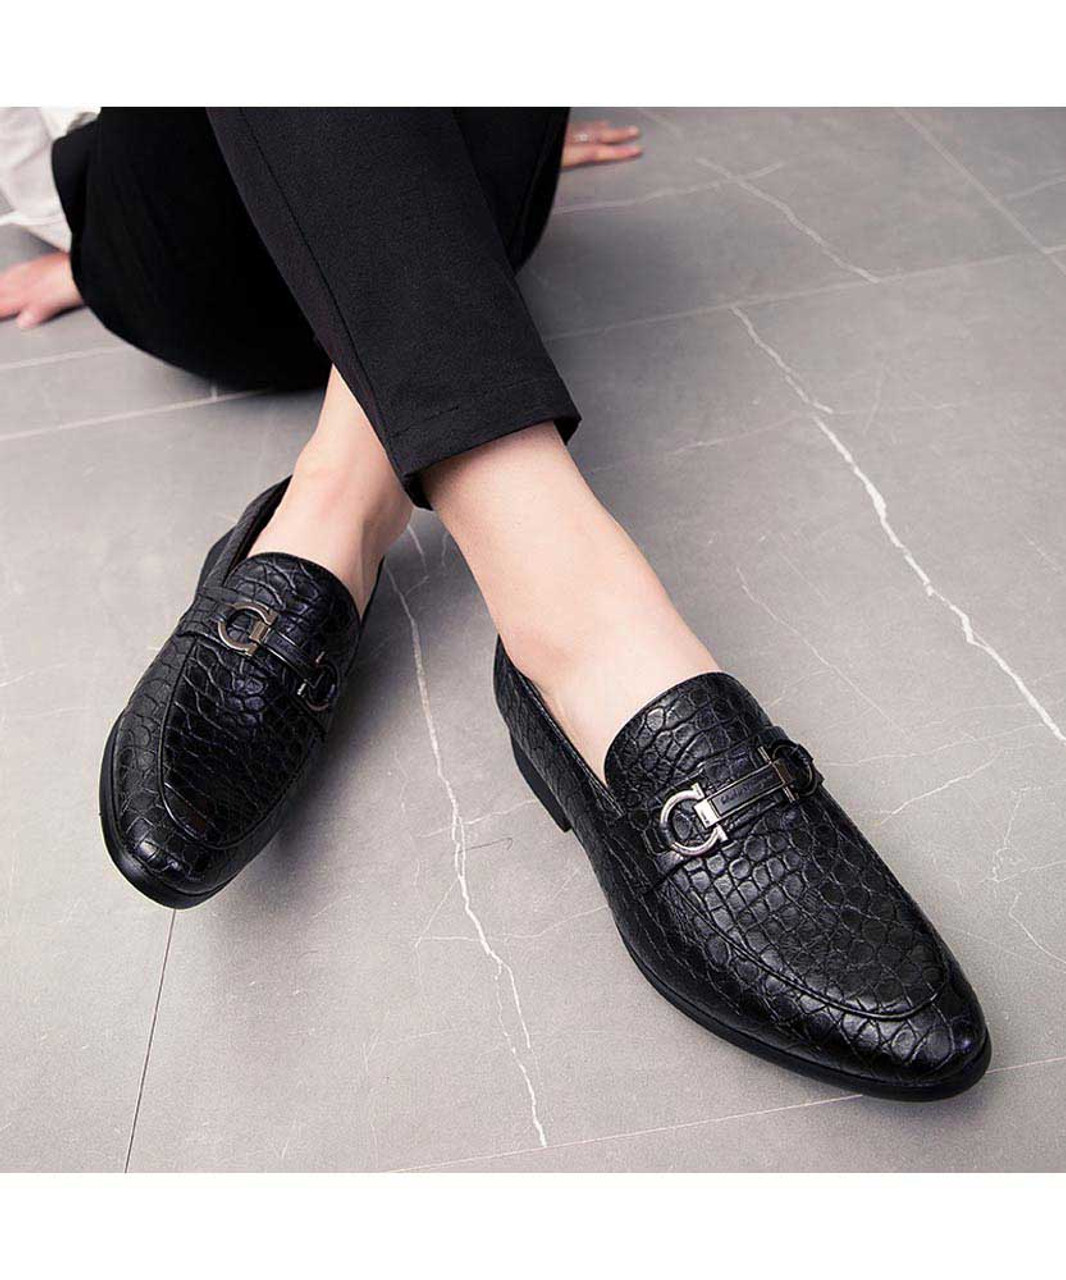 Black retro croco pattern buckle slip on dress shoe | Mens dress shoes ...